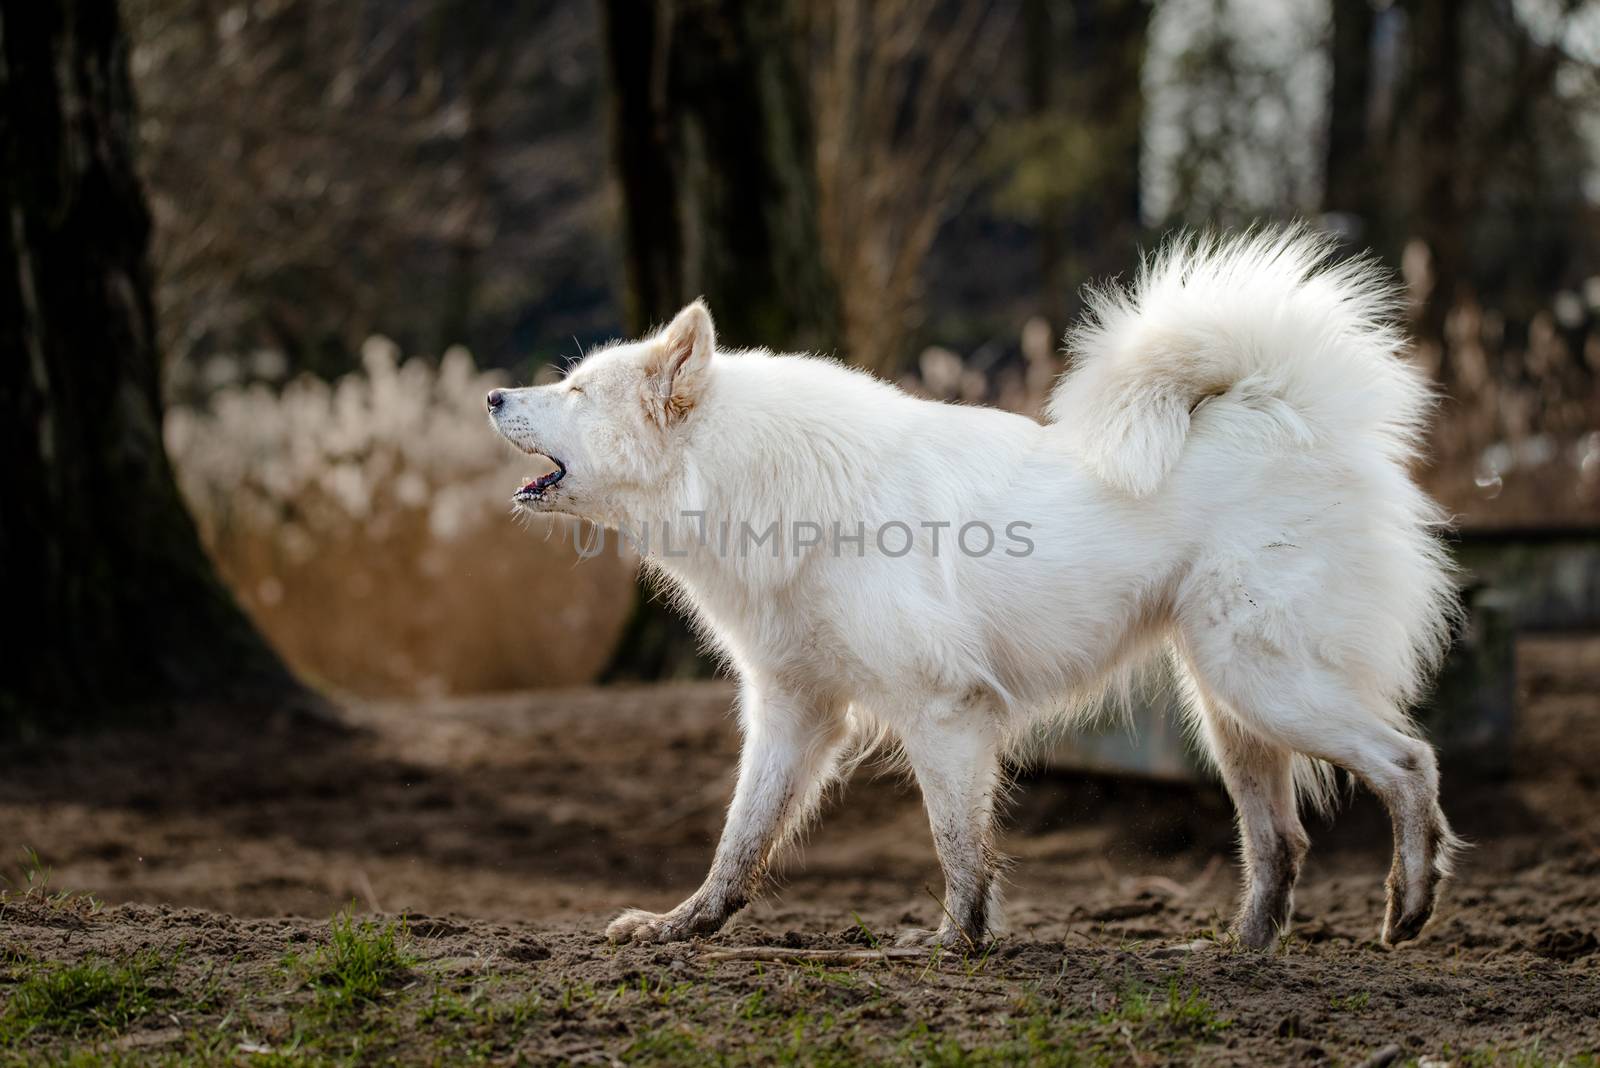 Cute, fluffy white Samoyed dog at the dog park